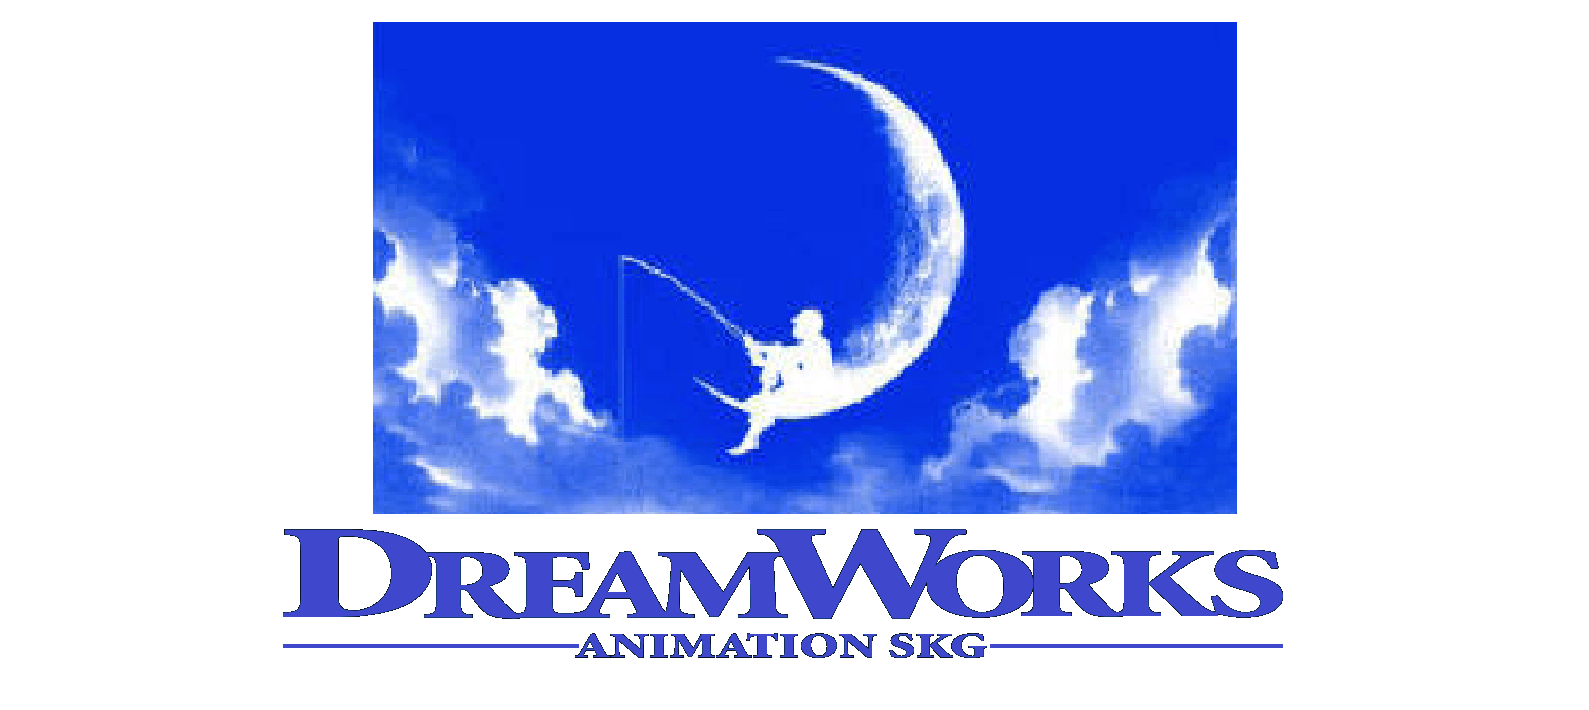 New DreamWorks Logo - Image - DreamWorks Animation new print logo 2.png | The Idea Wiki ...